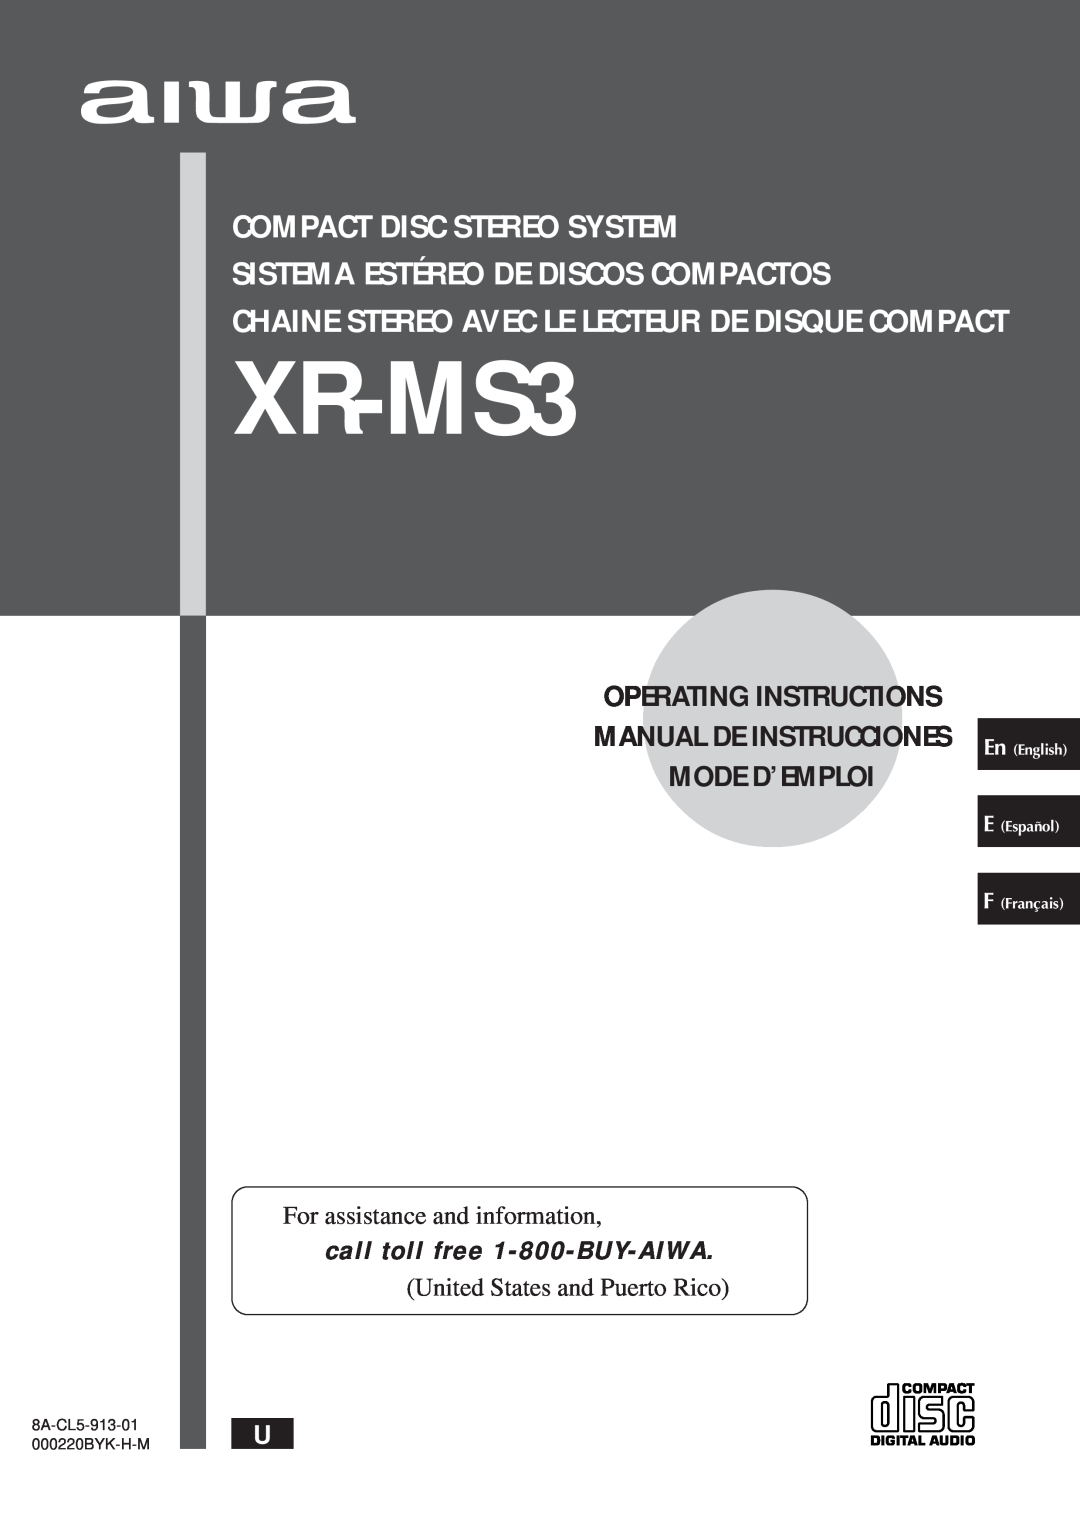 Aiwa XR-MS3 manual Compact Disc Stereo System, Sistema Estéreo De Discos Compactos, call toll free 1-800-BUY-AIWA 